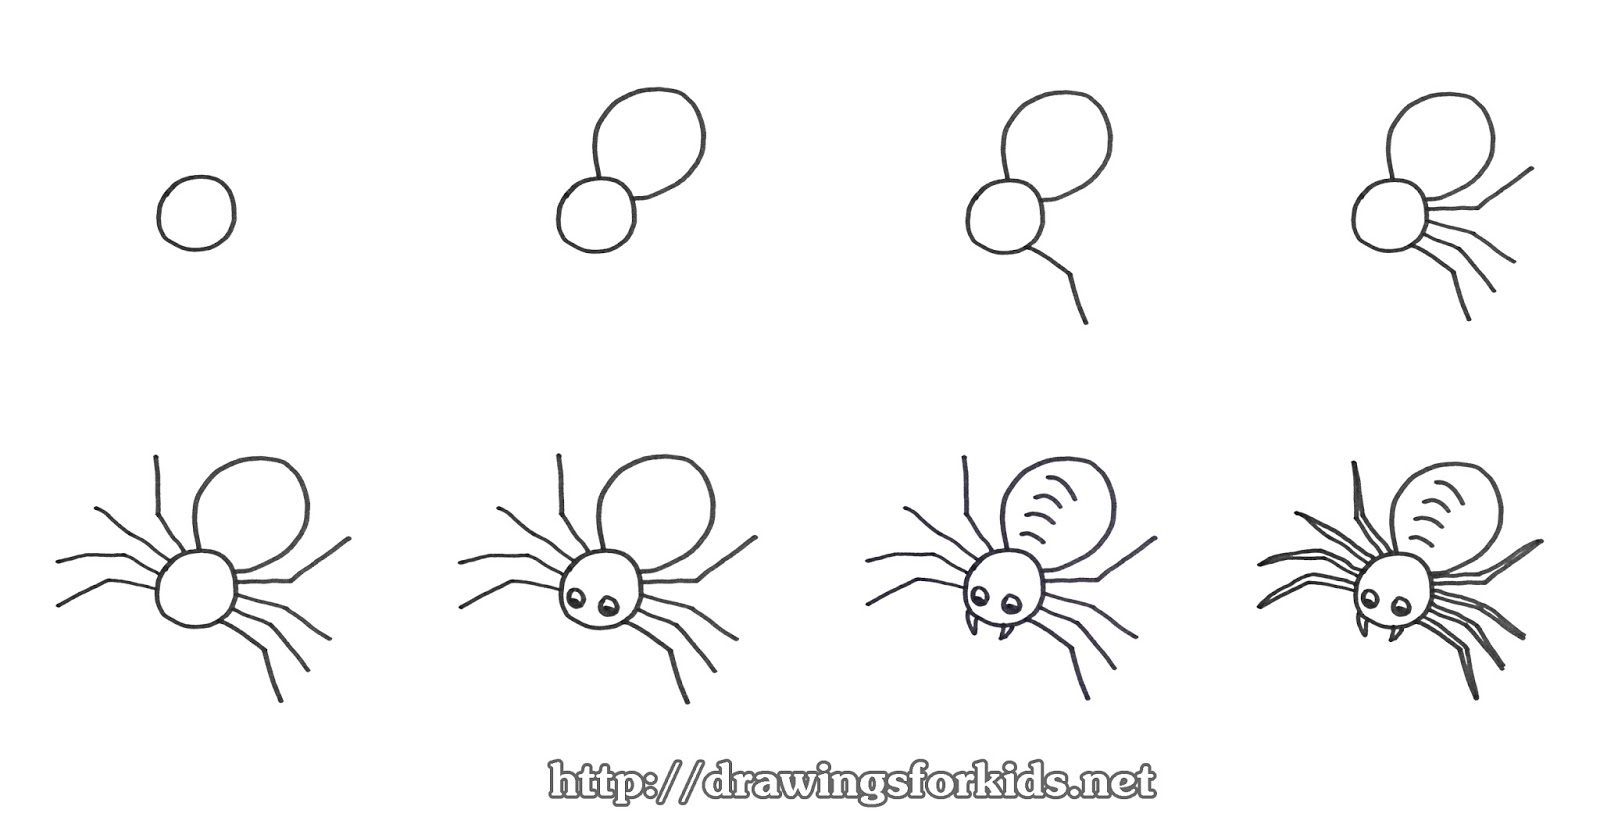 Как нарисовать человека‐паука - wikihow